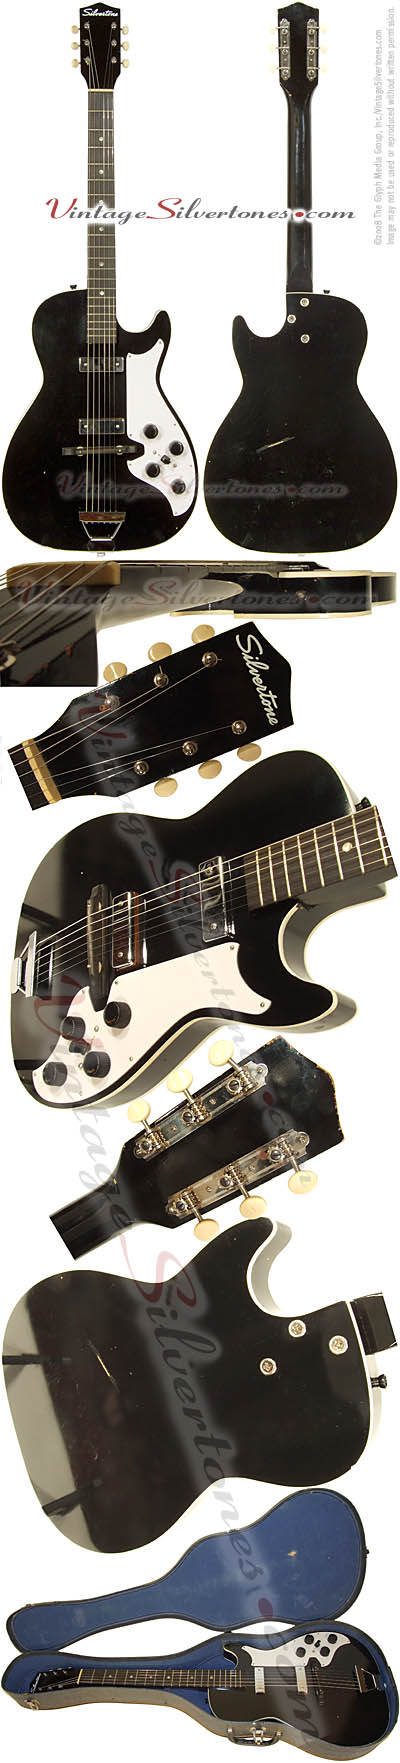 Silvertone 1420L - Harmony Stratotone - 2 pickup, black hollow body electric guitar made in Chicago IL USA 1962 - B-11/2008